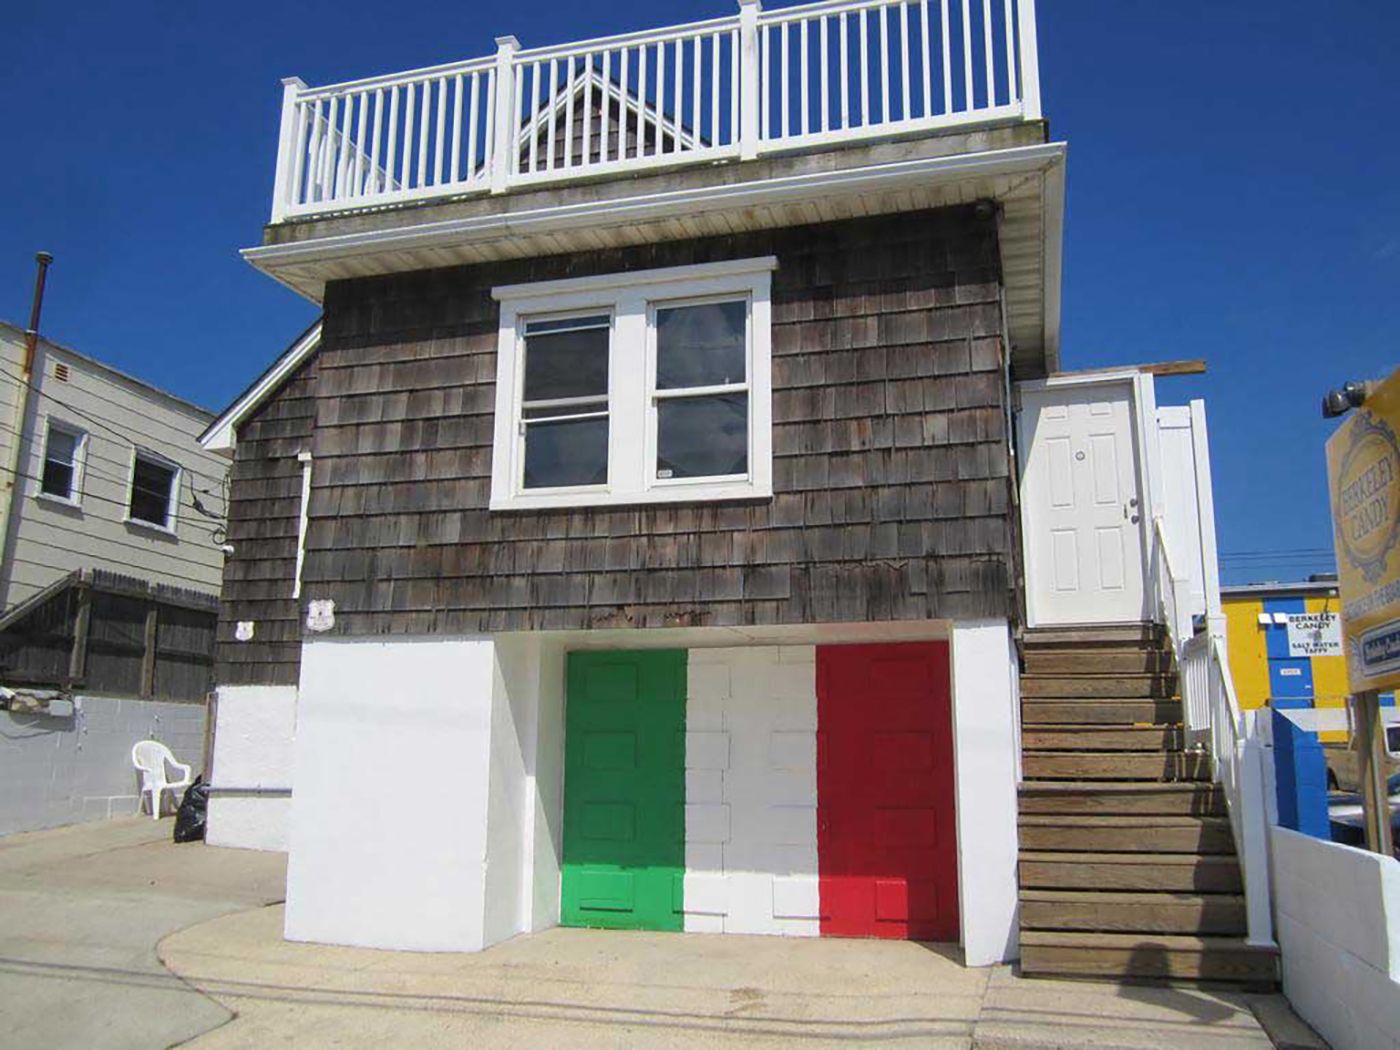 https://jerseydigs.com/mtv-jersey-shore-house-seaside-heights-nj-for-rent/